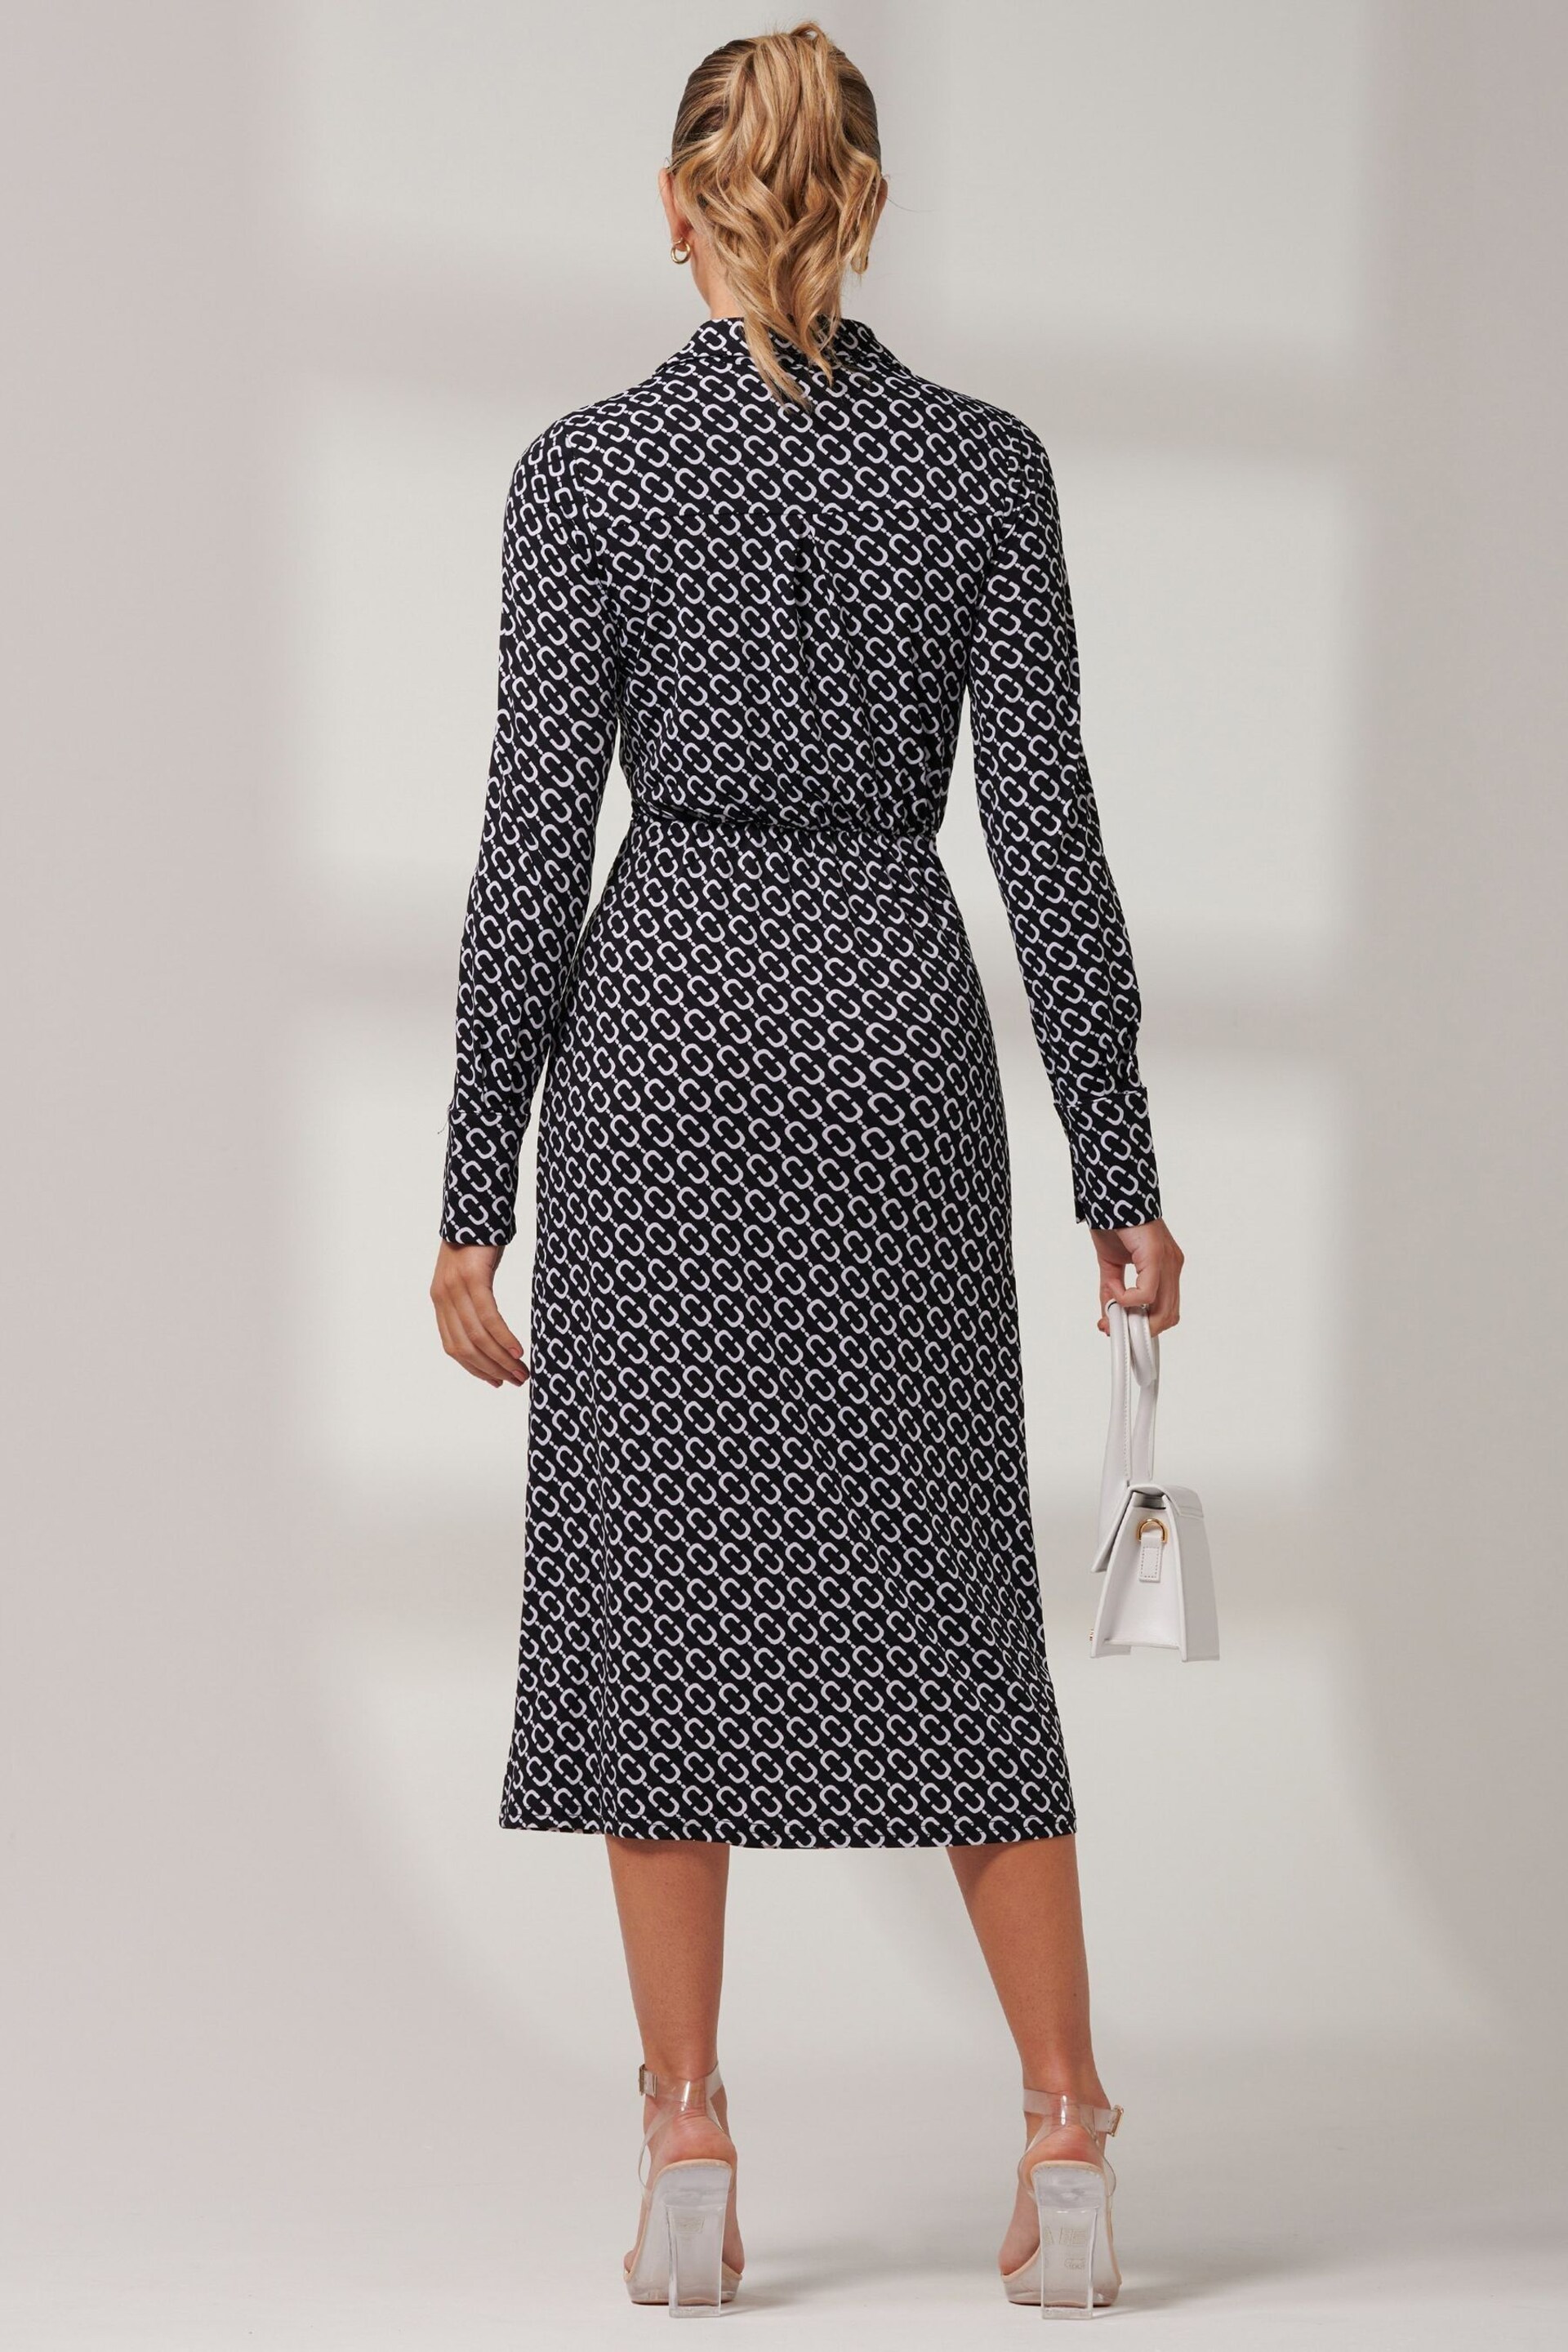 Jolie Moi Black Reana Front Wrap Jersey Shirt Dress - Image 2 of 6